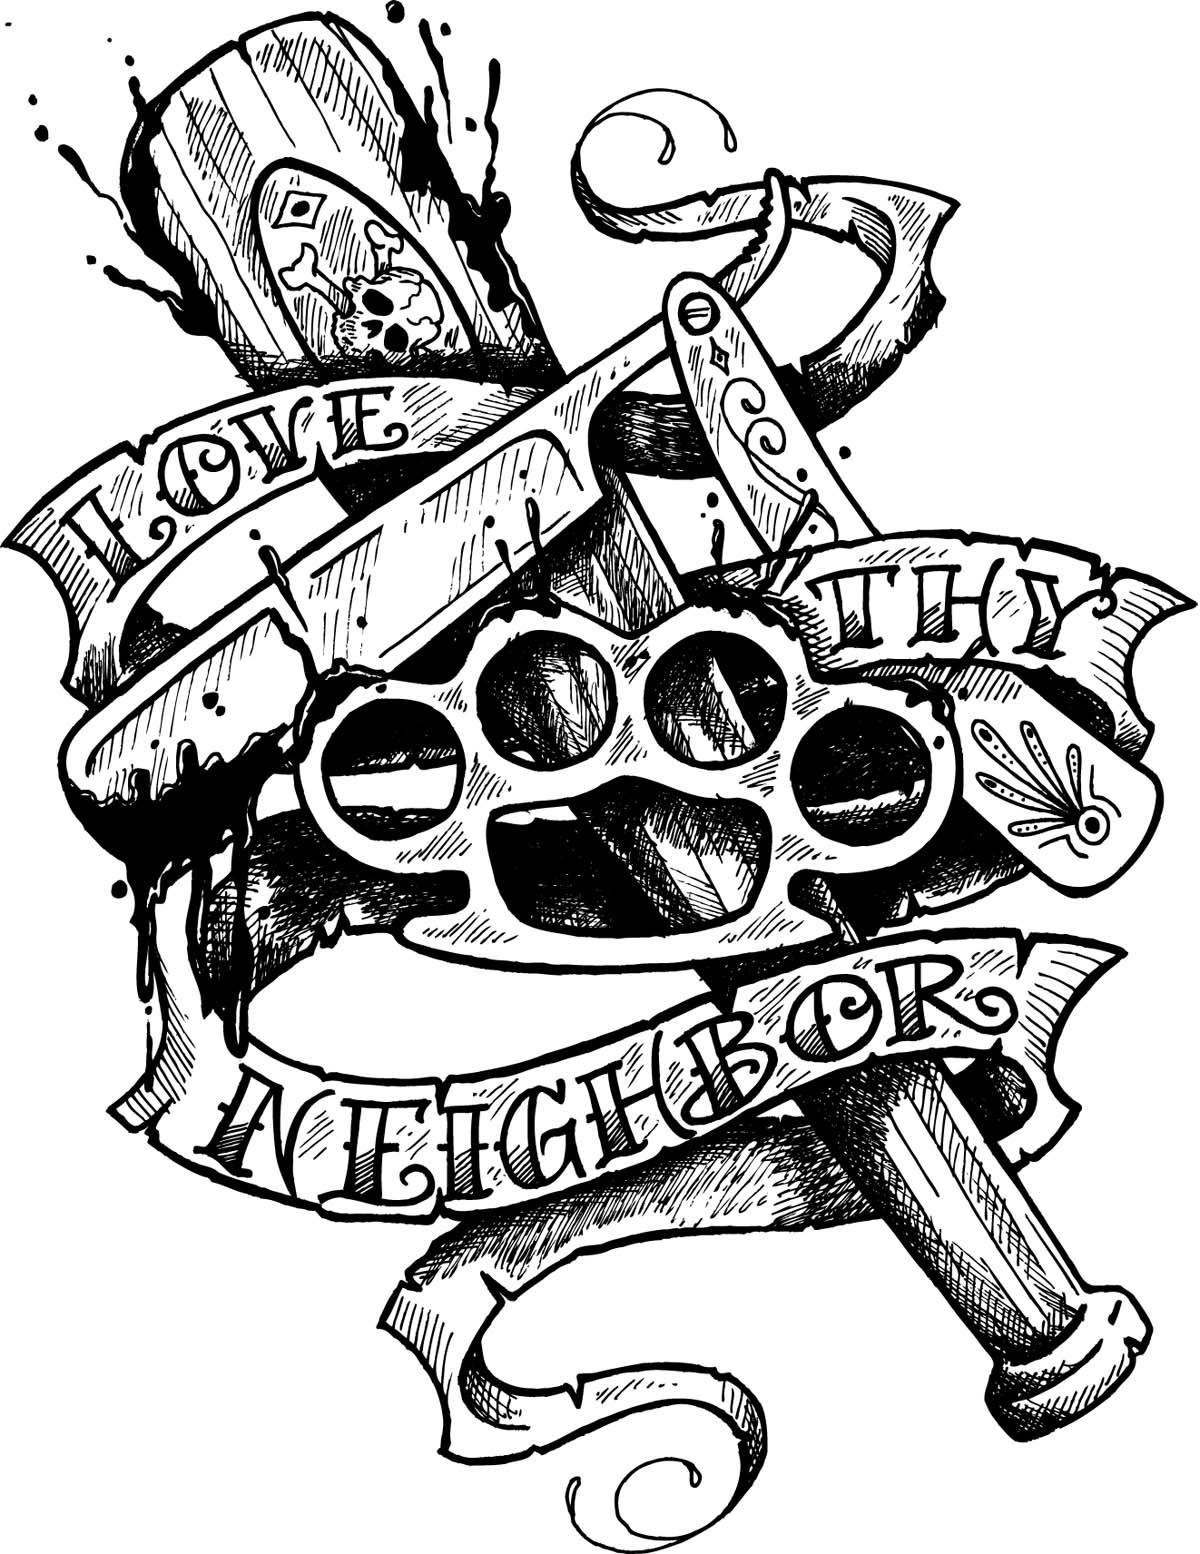 love-thy-neighbor-tattoo-flash-by-sd-designs-1872512913